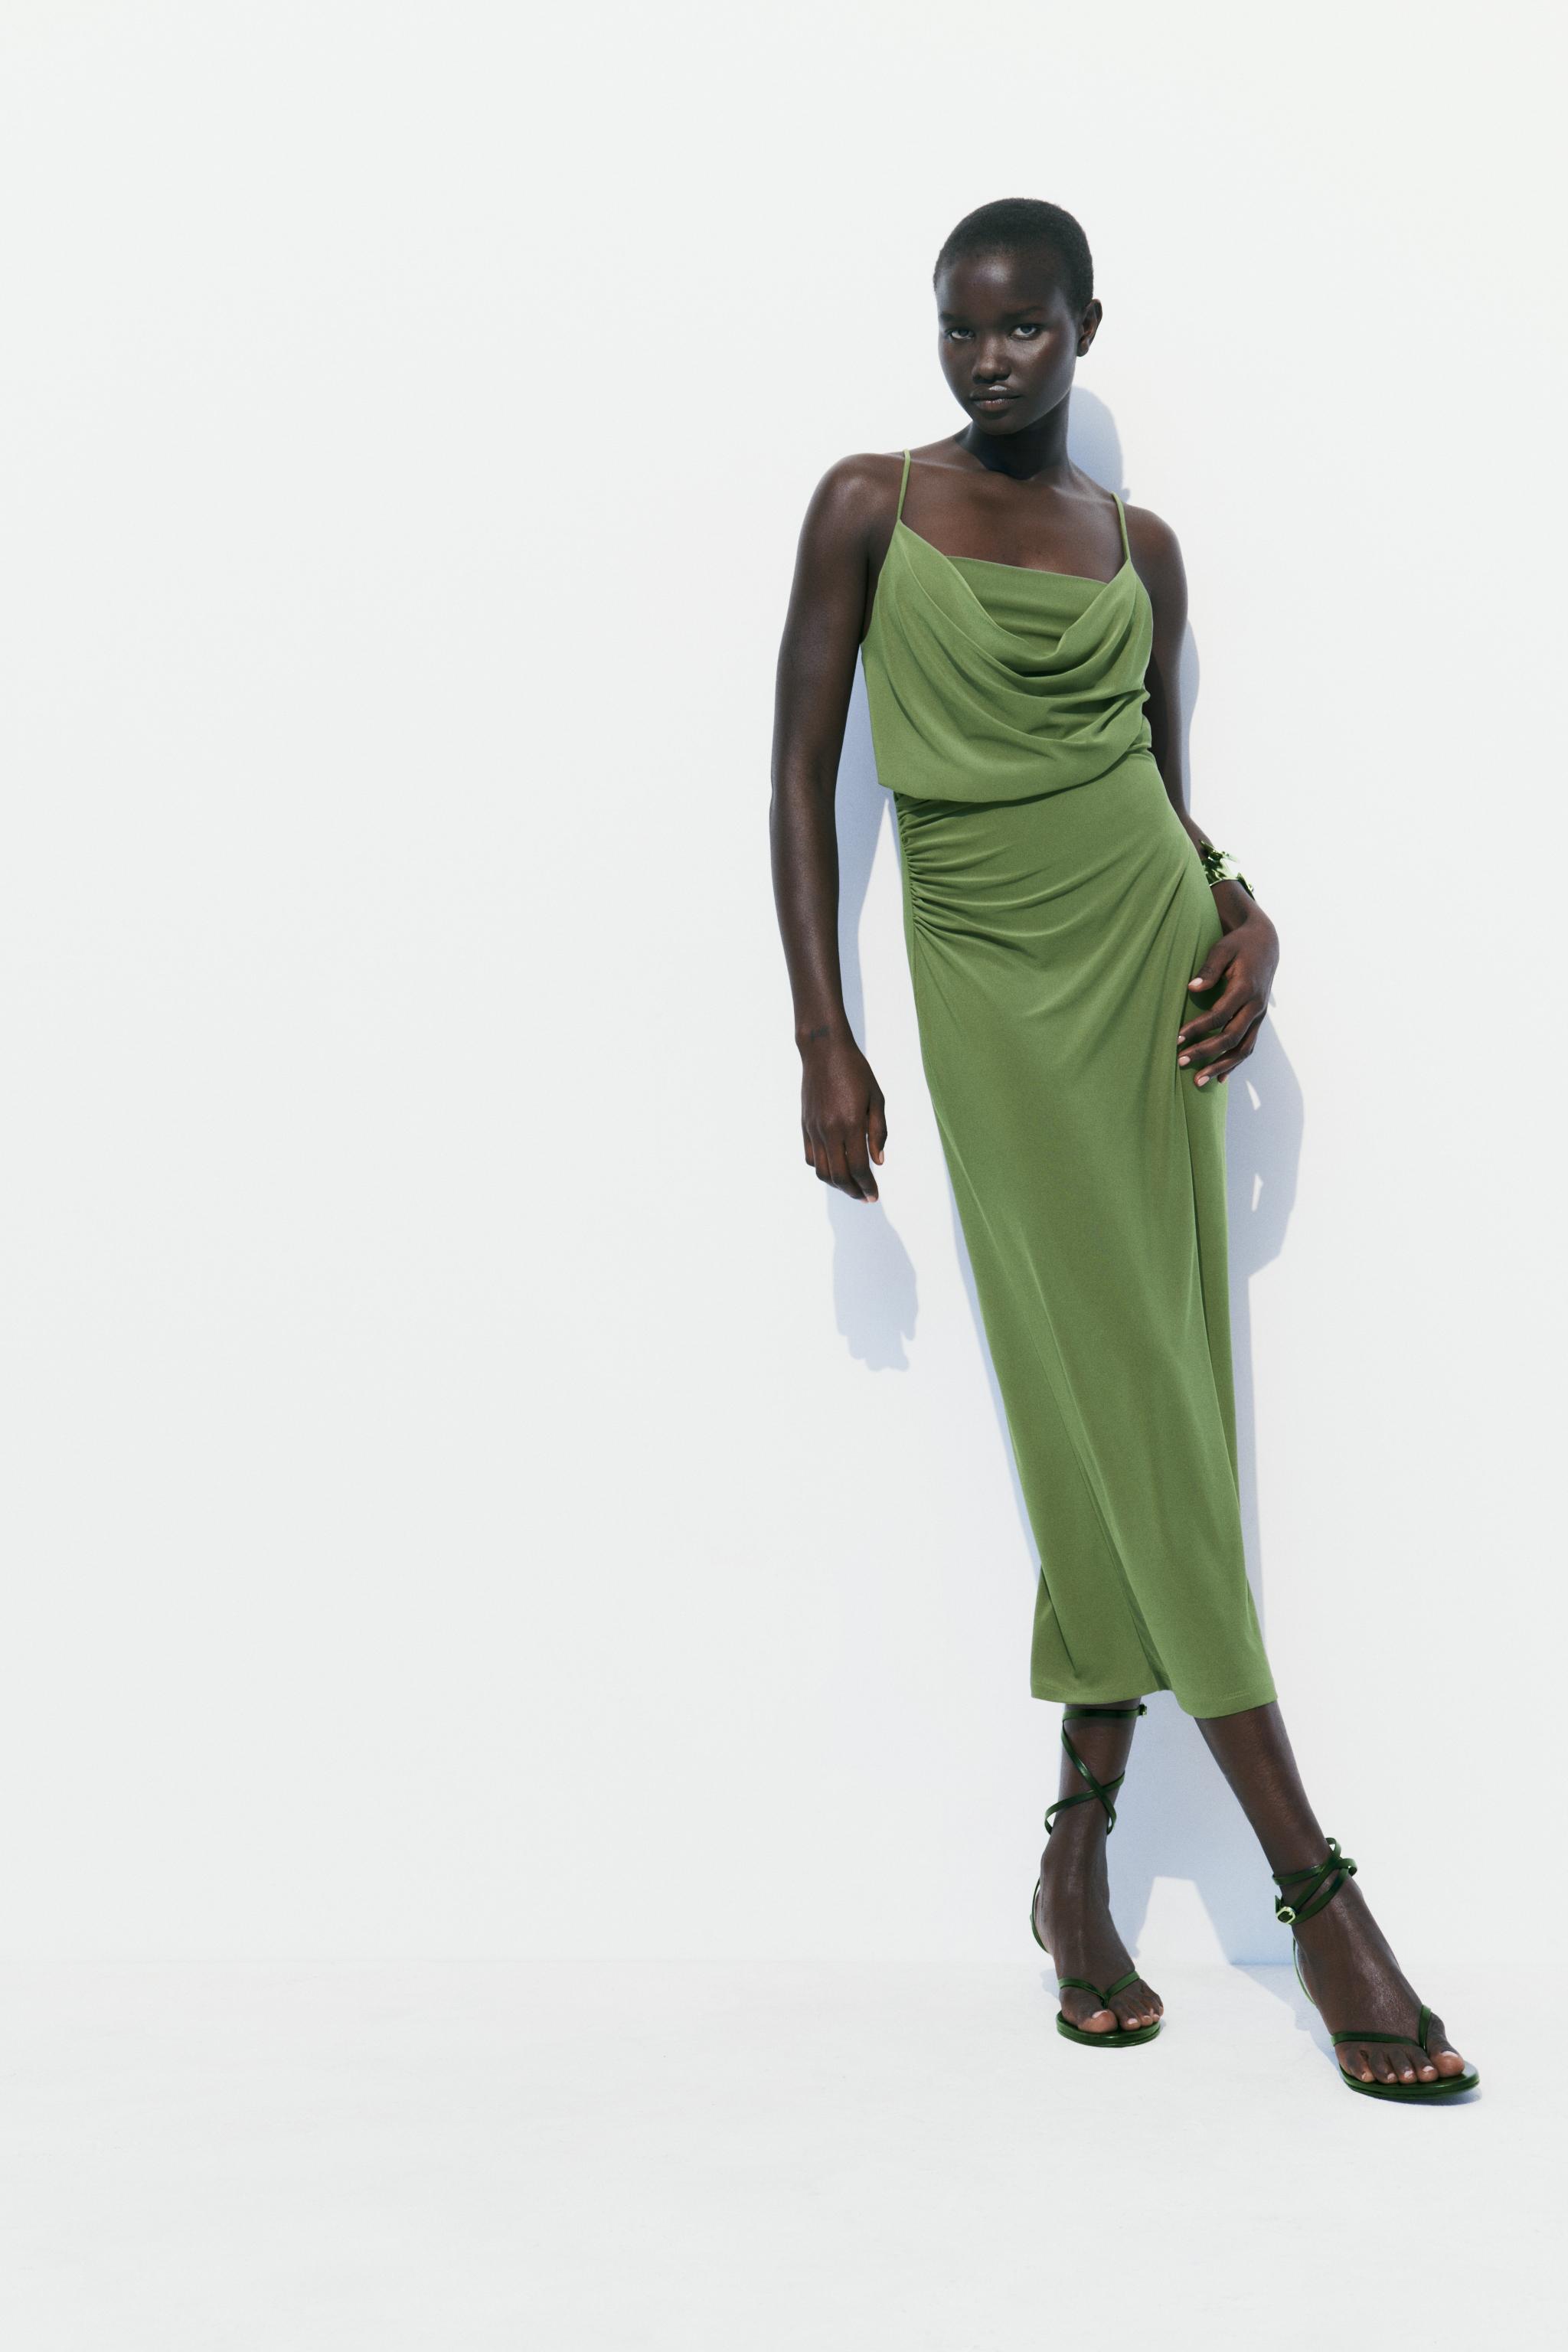 Zara Green Satin Wrap Dress Preloved Size 14/16 – Neon Leo